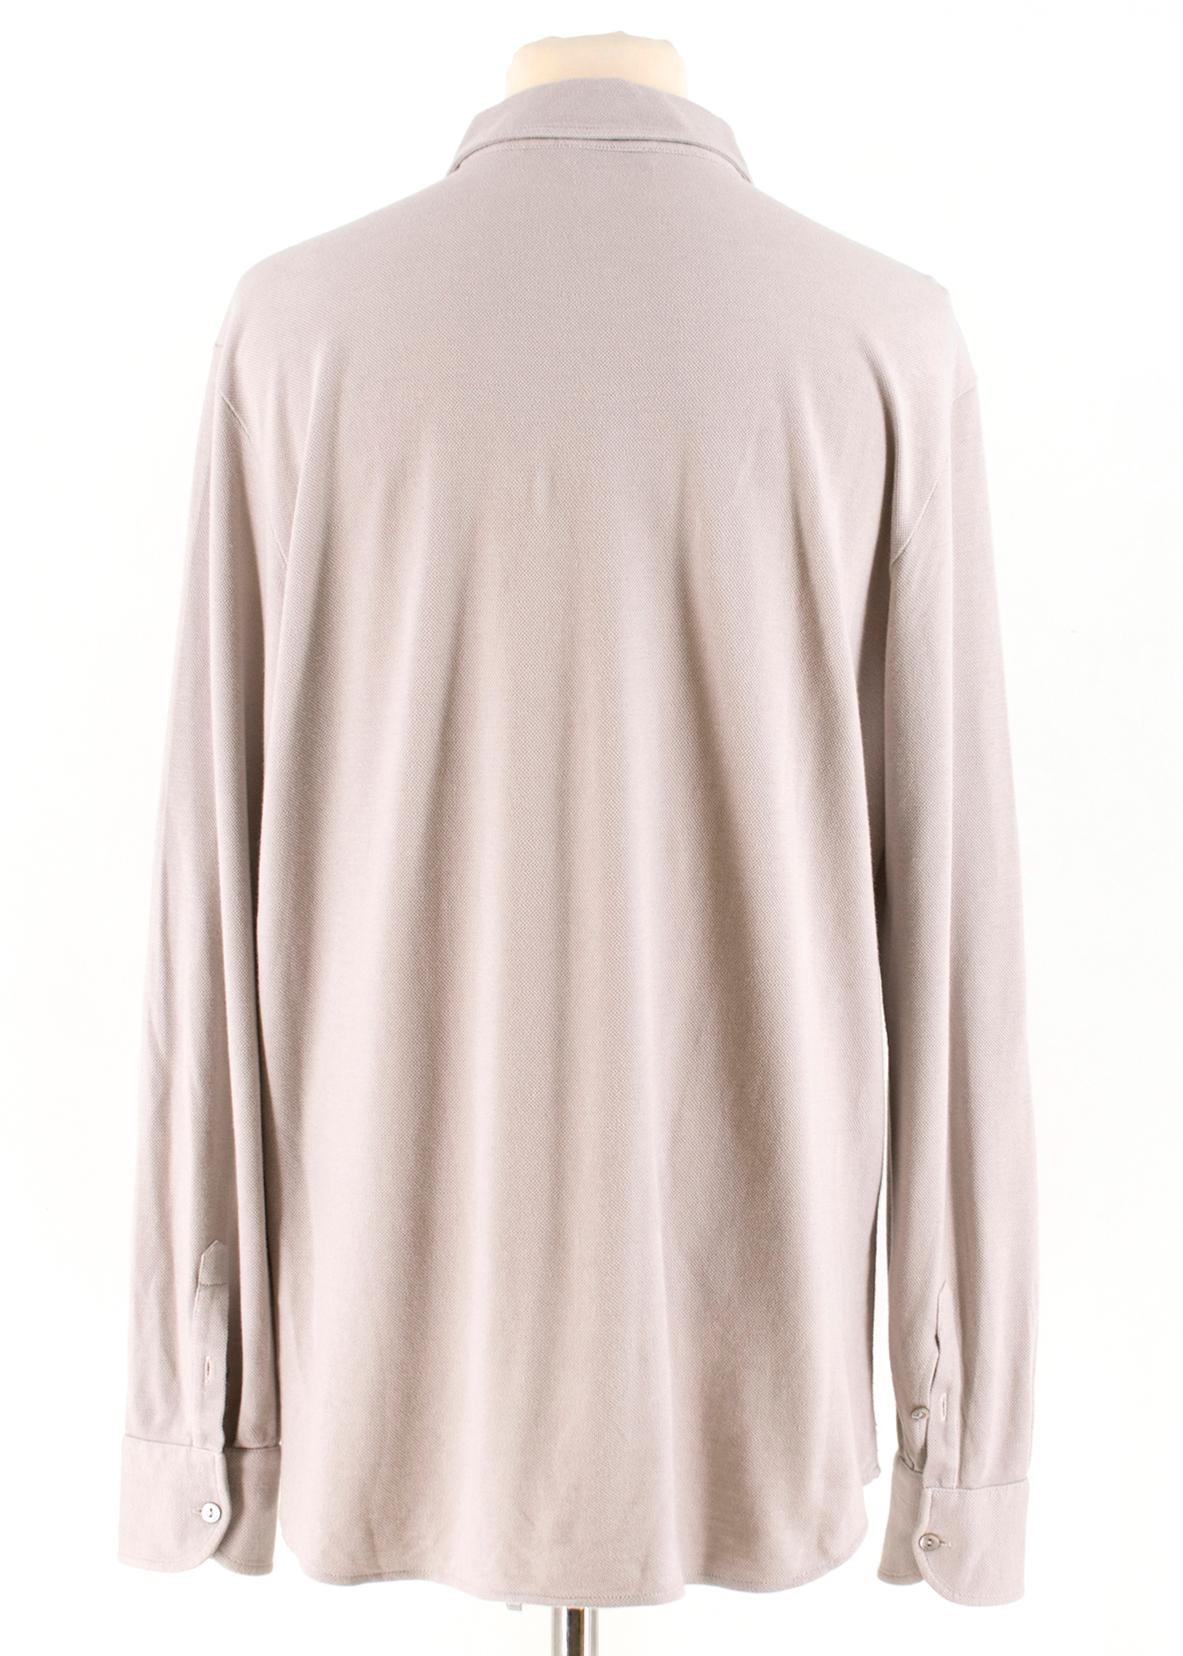 Gray Loro Piana Men's Light Taupe Cotton & Cashmere Polo Shirt XL